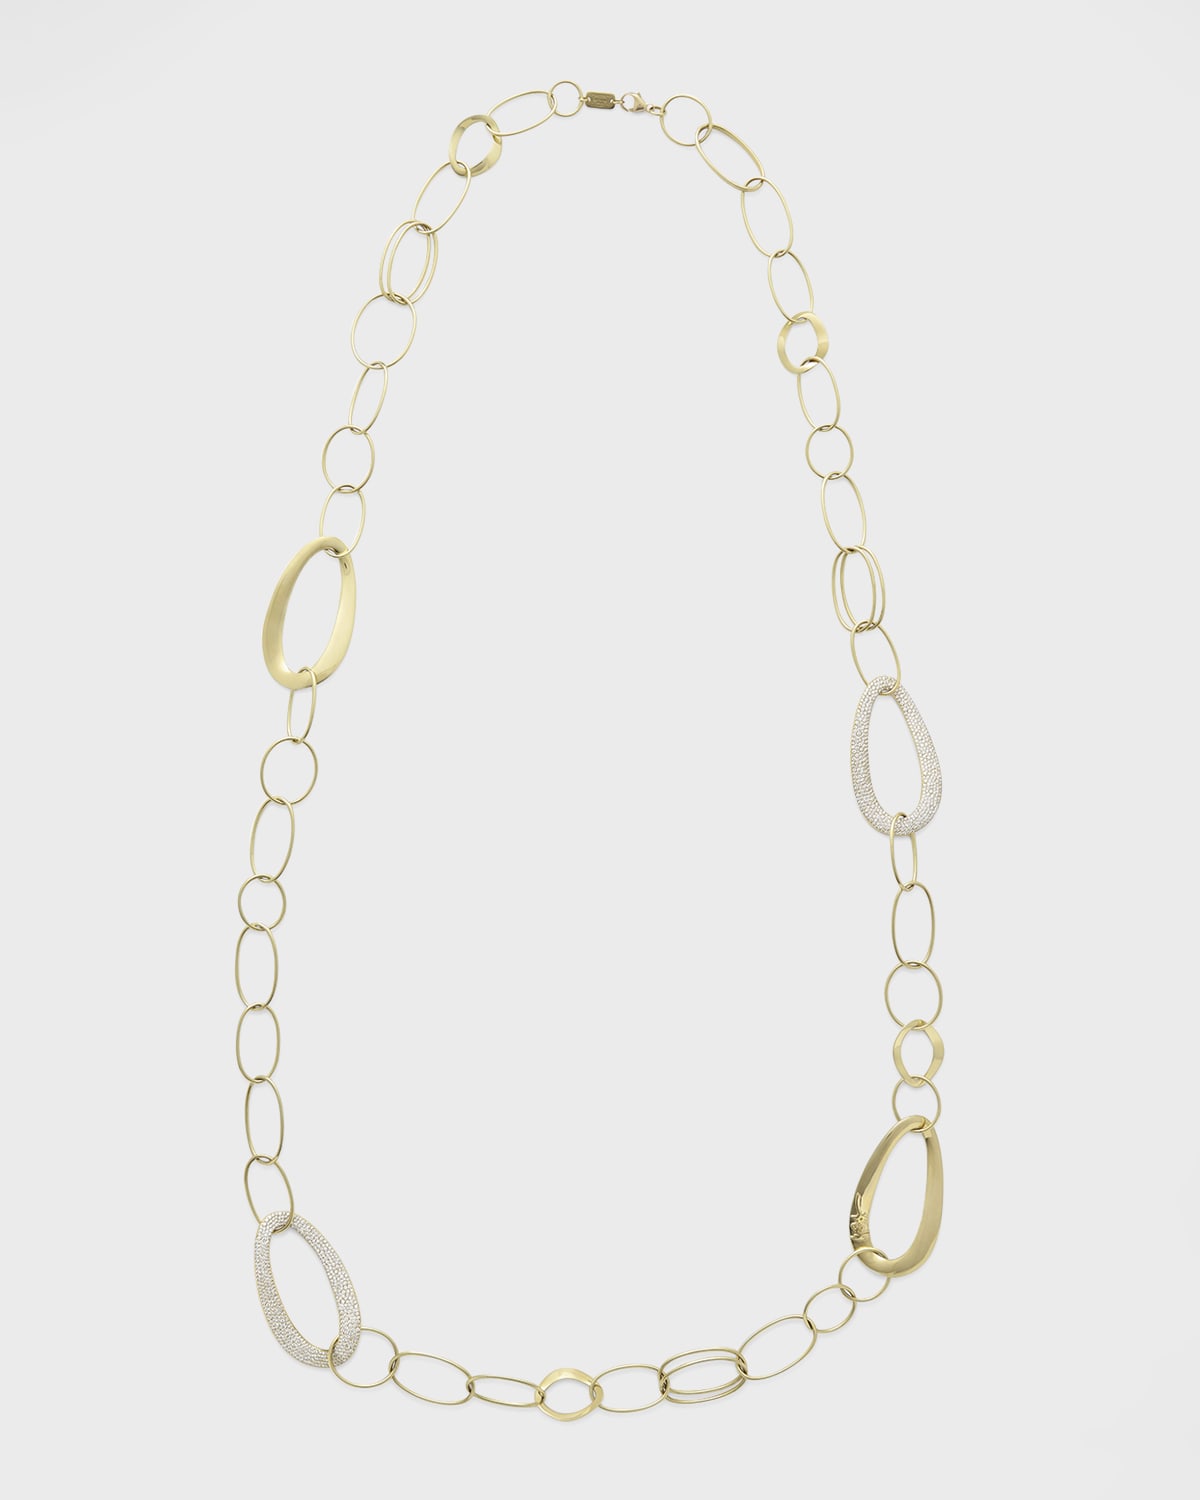 Ippolita 18K Glamazon Cherish Chain Necklace with Diamond Accents, 40"